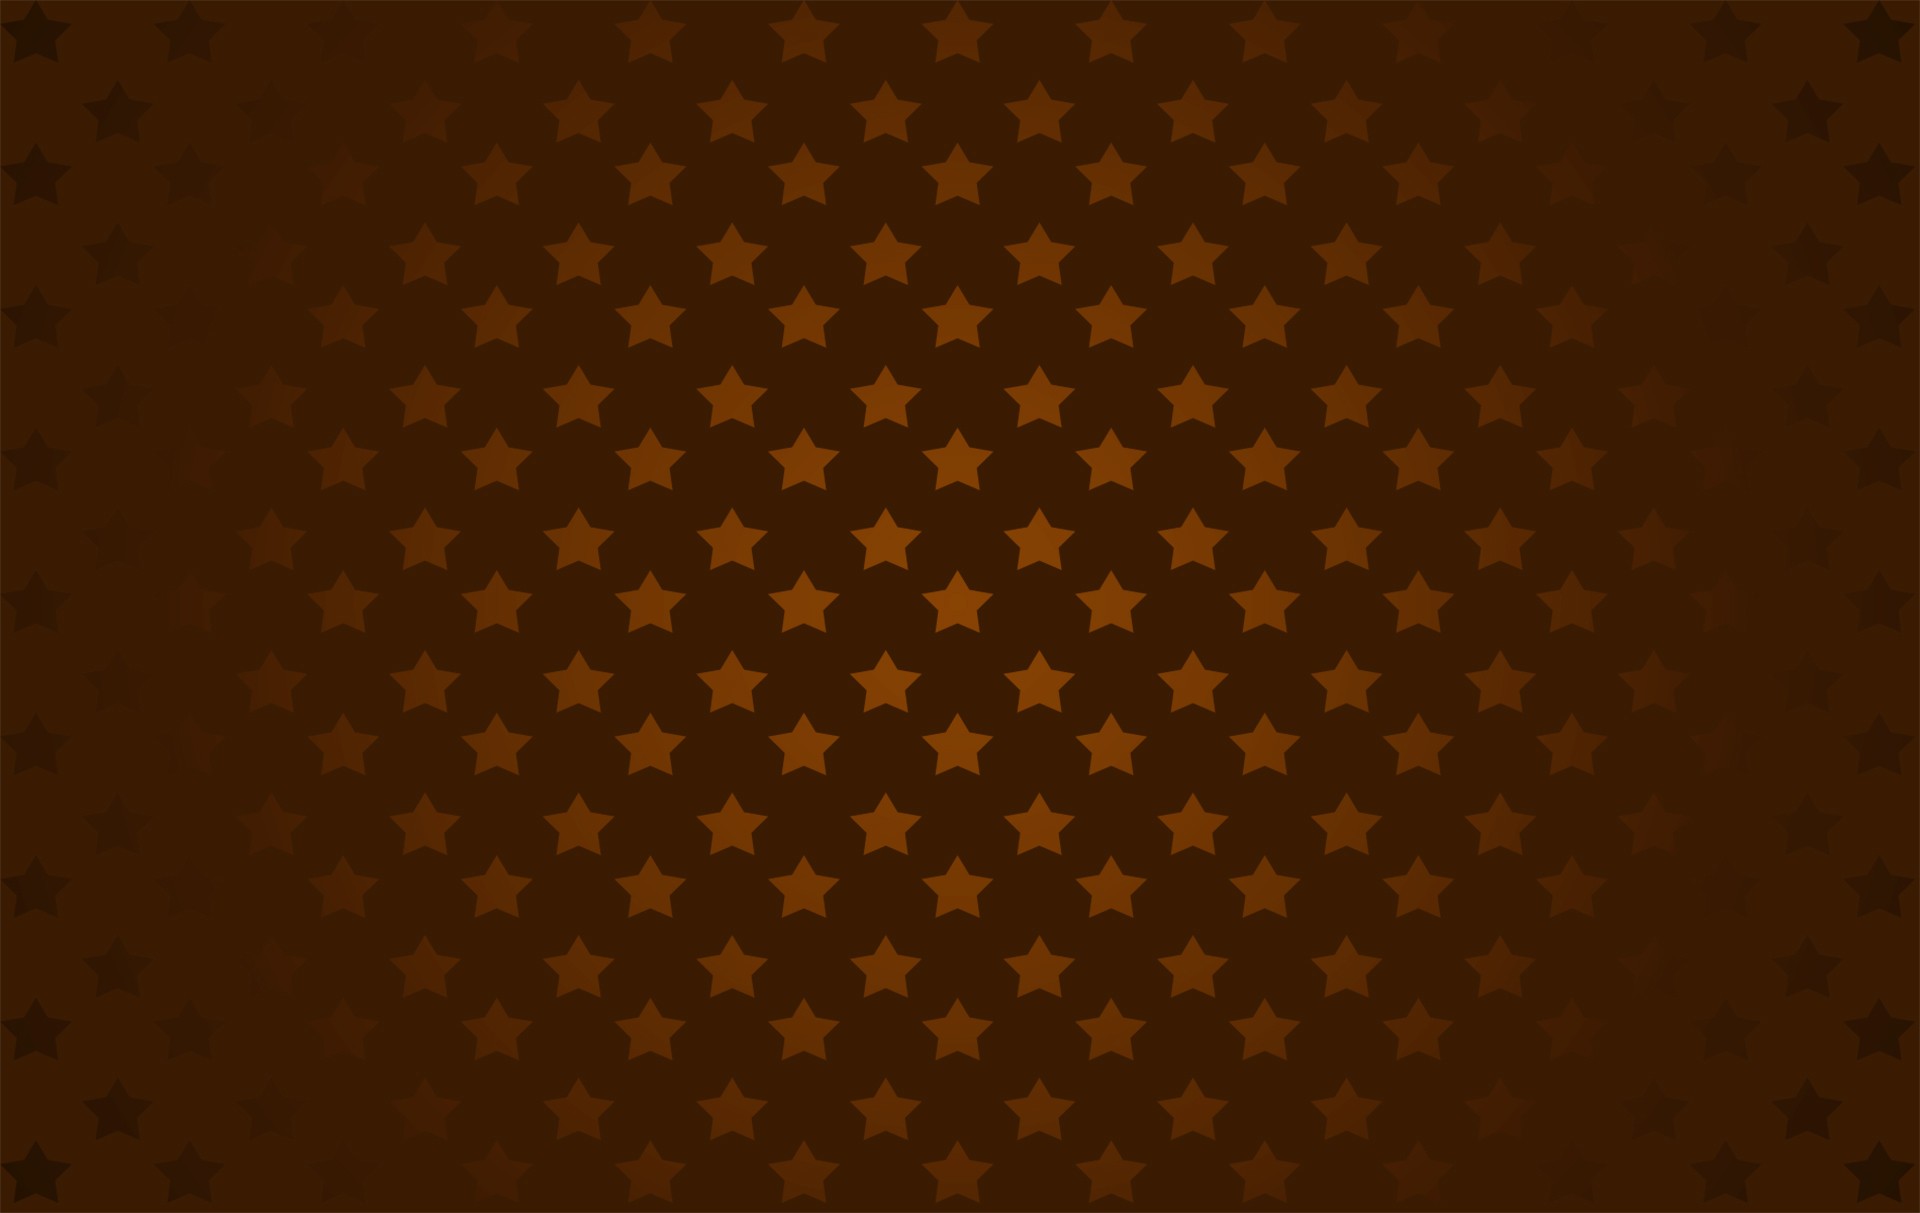 General 1920x1213 abstract digital art minimalism simple background stars brown texture pattern